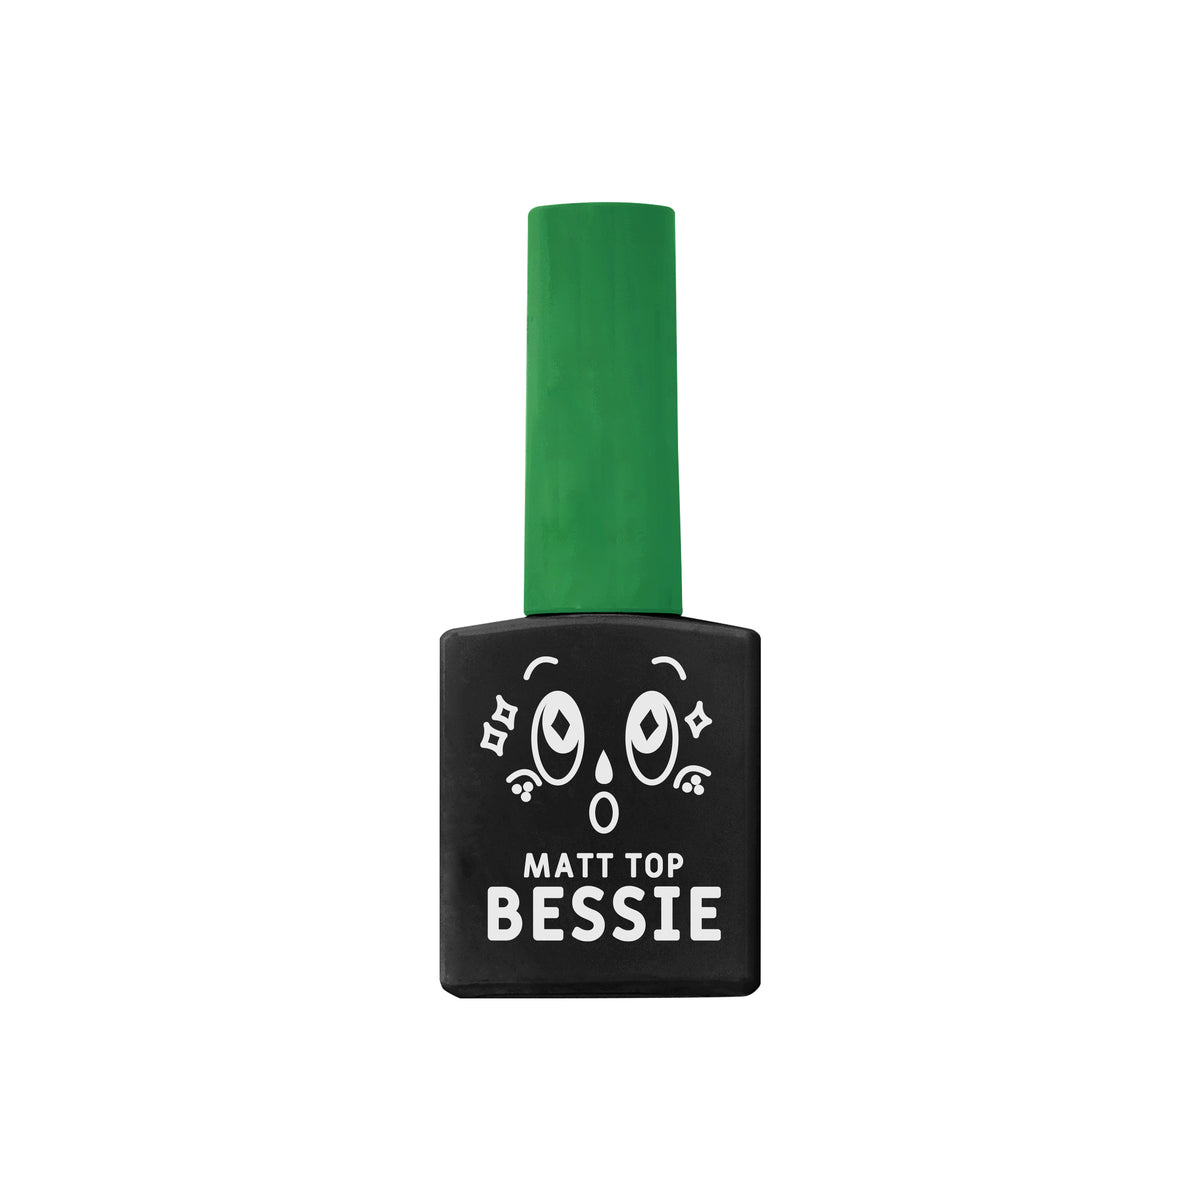 Geles básicos Bessie - Top sin toallitas / Top sin toallitas mate / Base / BIAB Clear